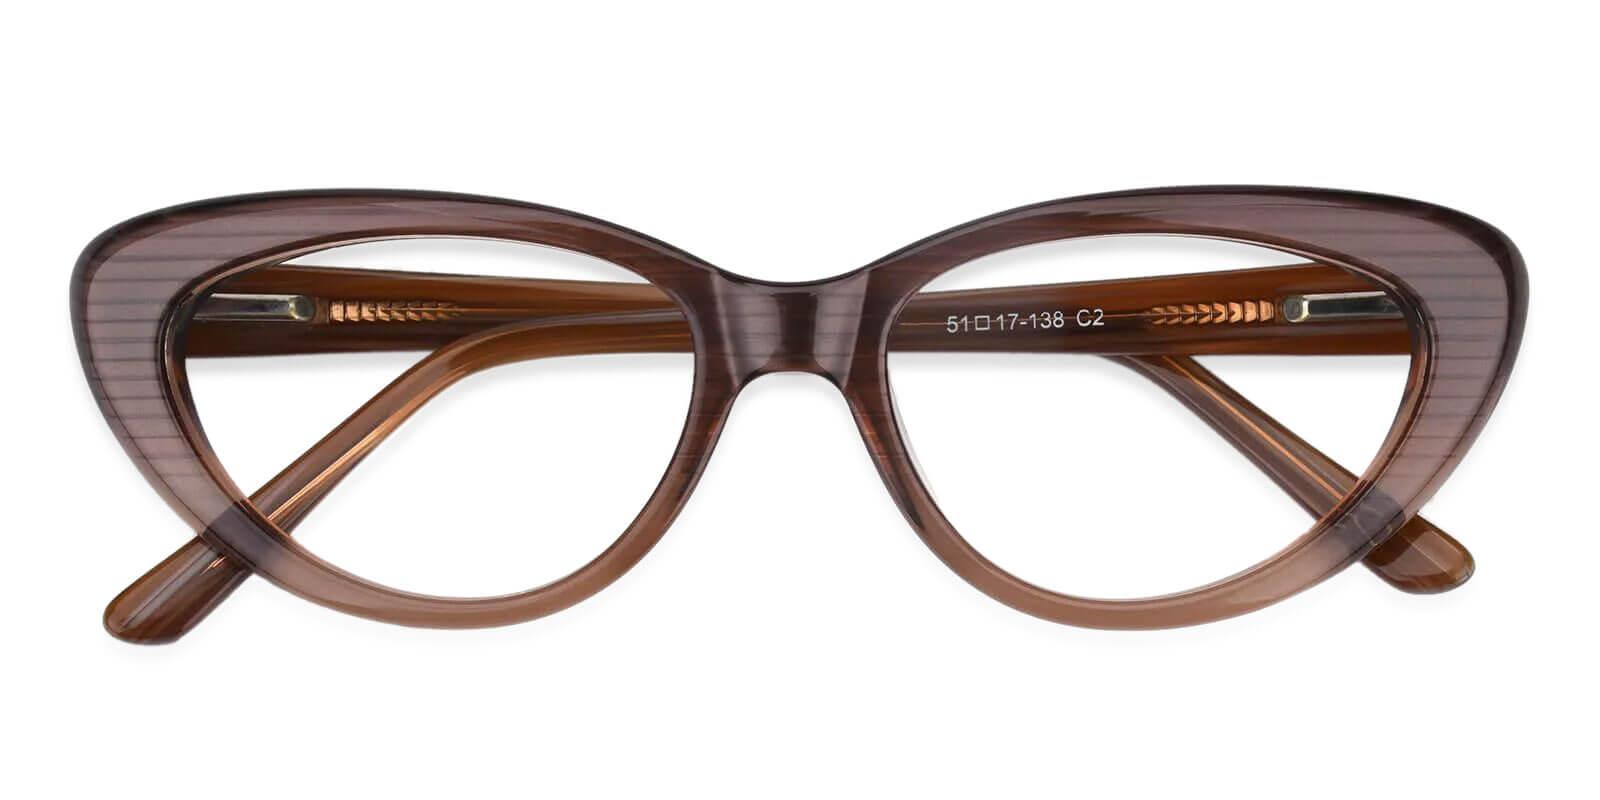 Stella Cream Acetate Eyeglasses , SpringHinges , UniversalBridgeFit Frames from ABBE Glasses